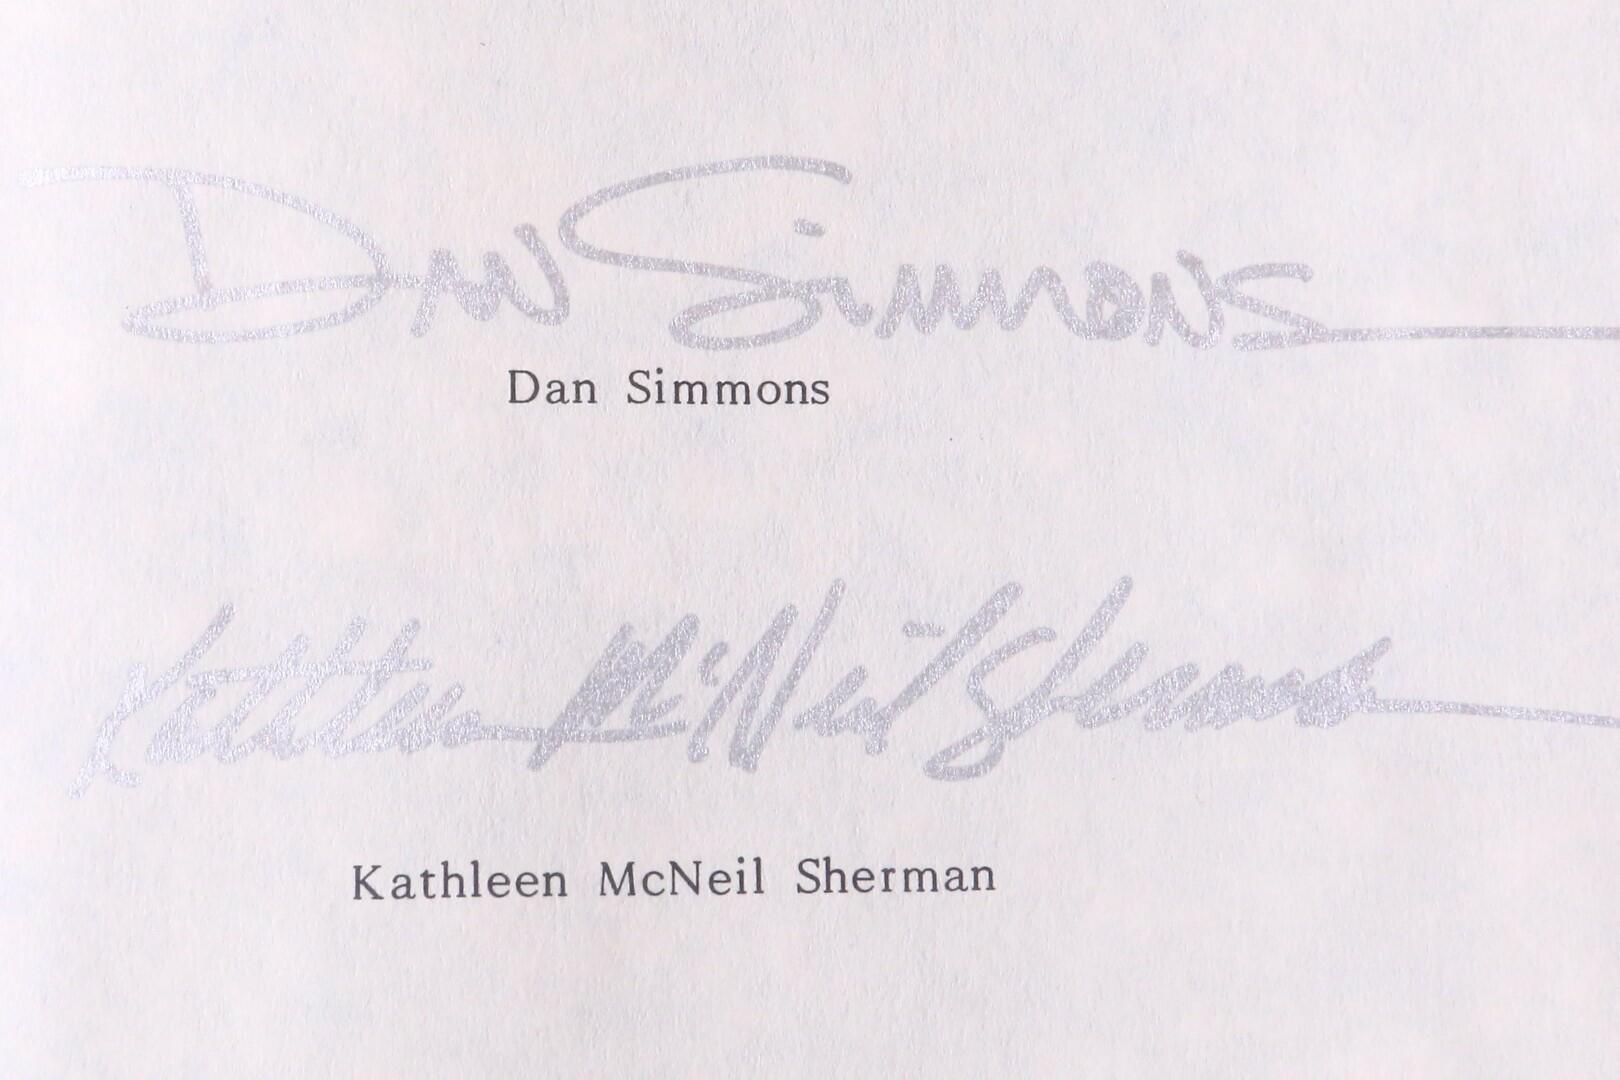 Dan Simmons - Carrion Comfort - Dark Harvest, 1989, Signed Limited Edition.